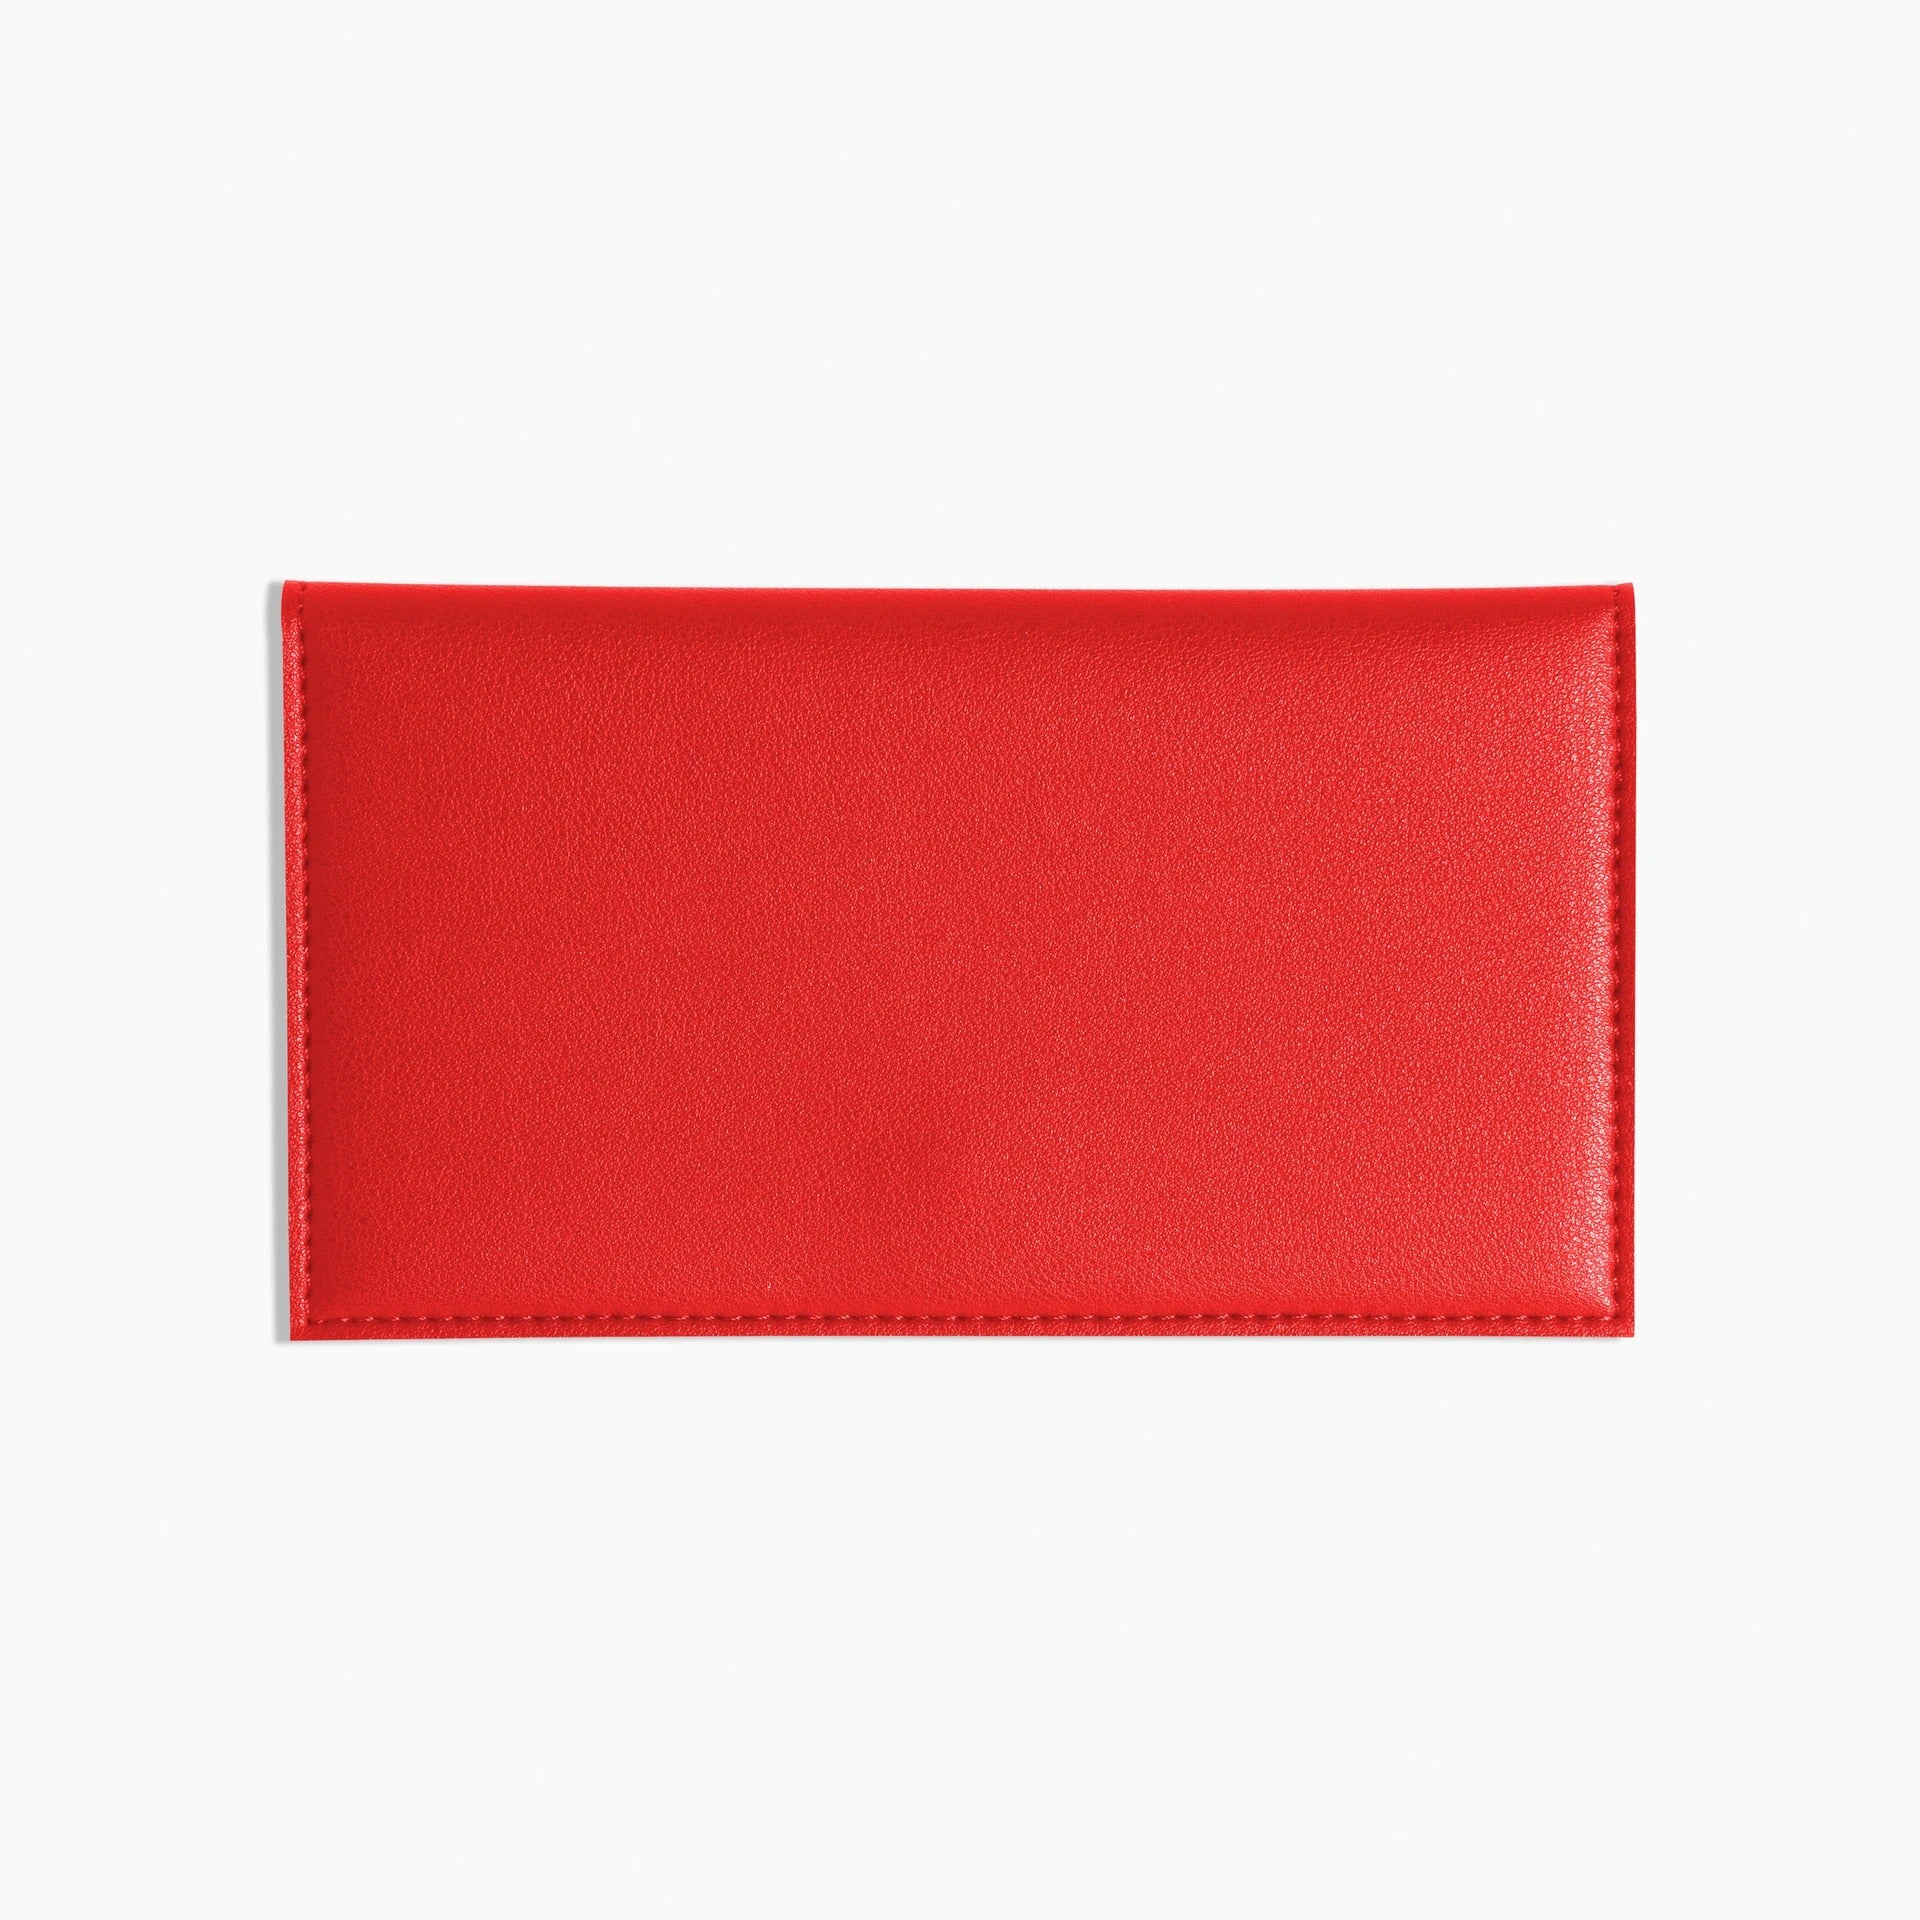 Minimalist Wallet in Red